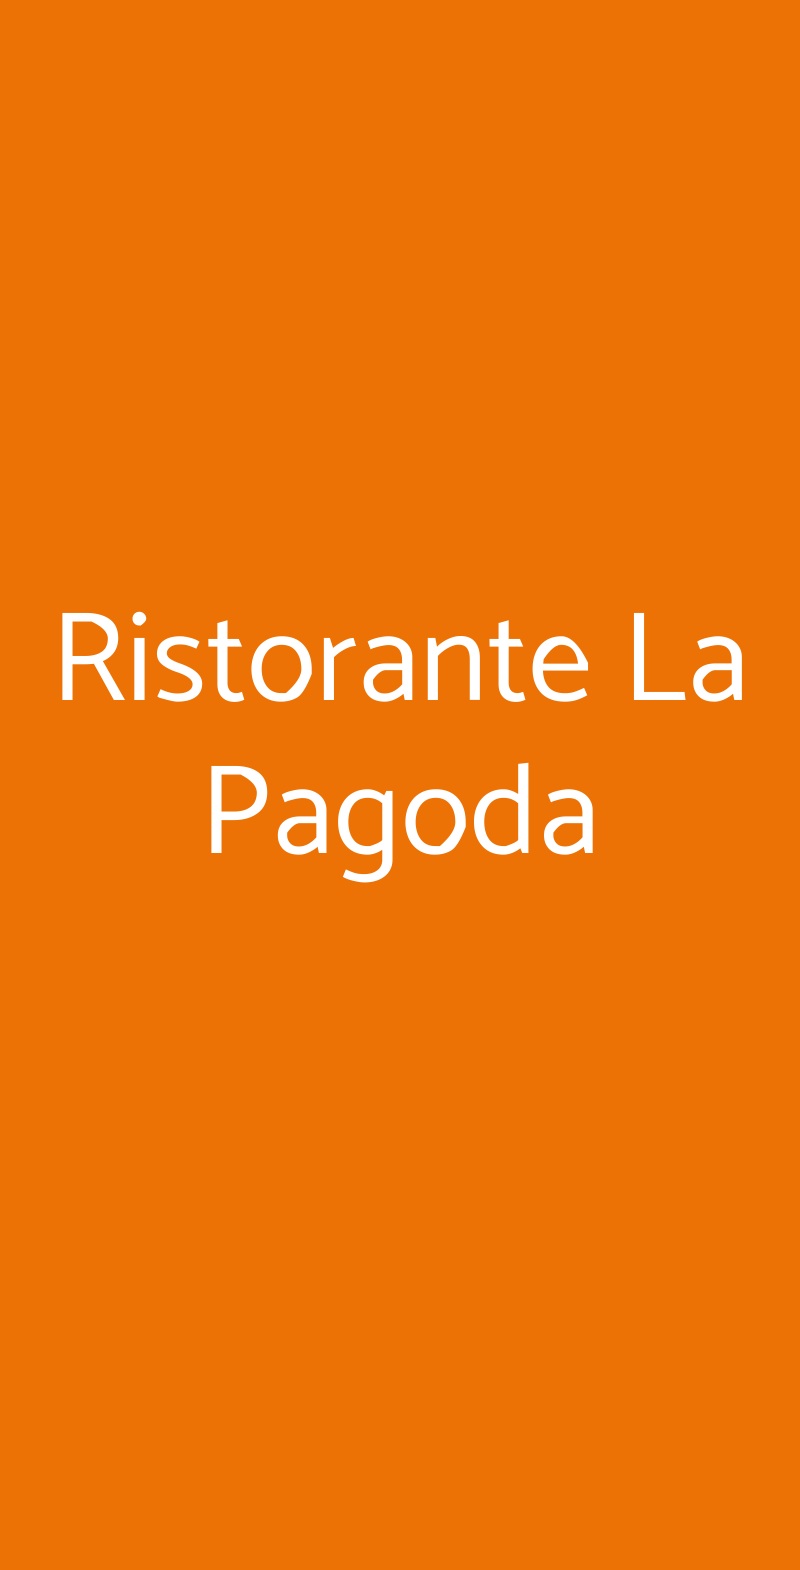 Ristorante La Pagoda Varese menù 1 pagina